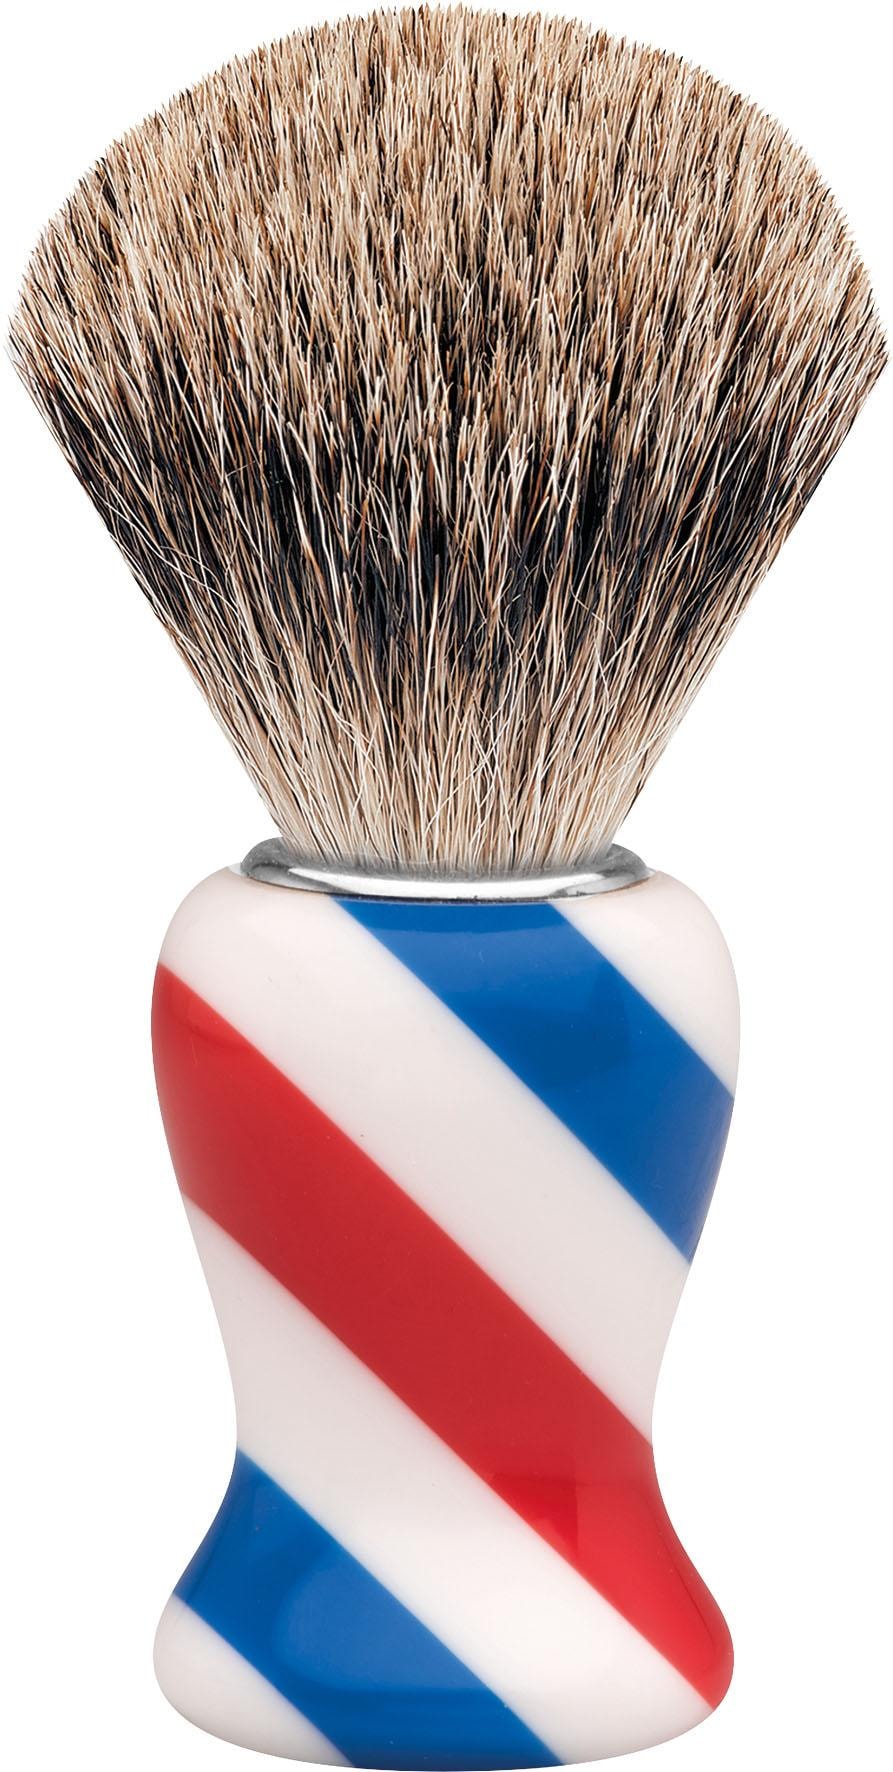 Barbershop OTTO shoppen Rasierpinsel Dachshaar, ERBE Design/Stripes online bei »M«,